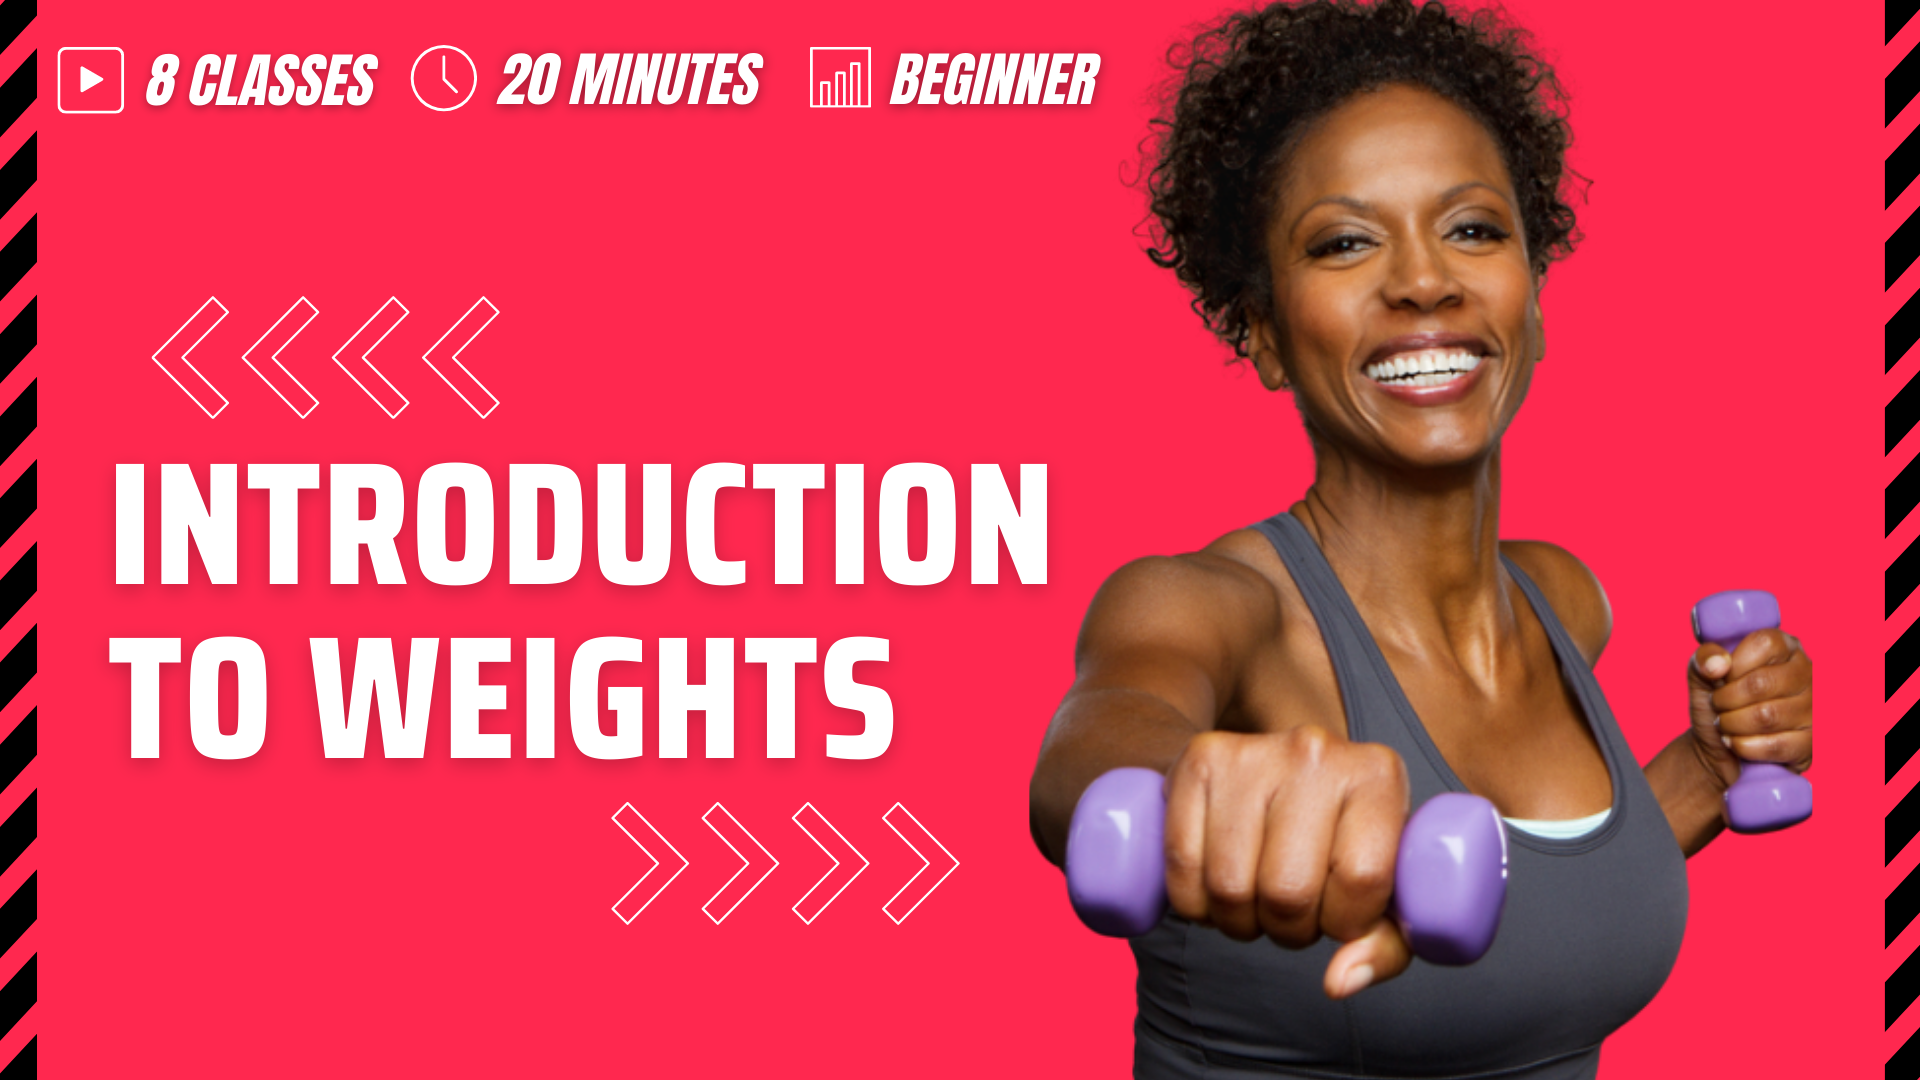 women-weights-class-8-instructorlive